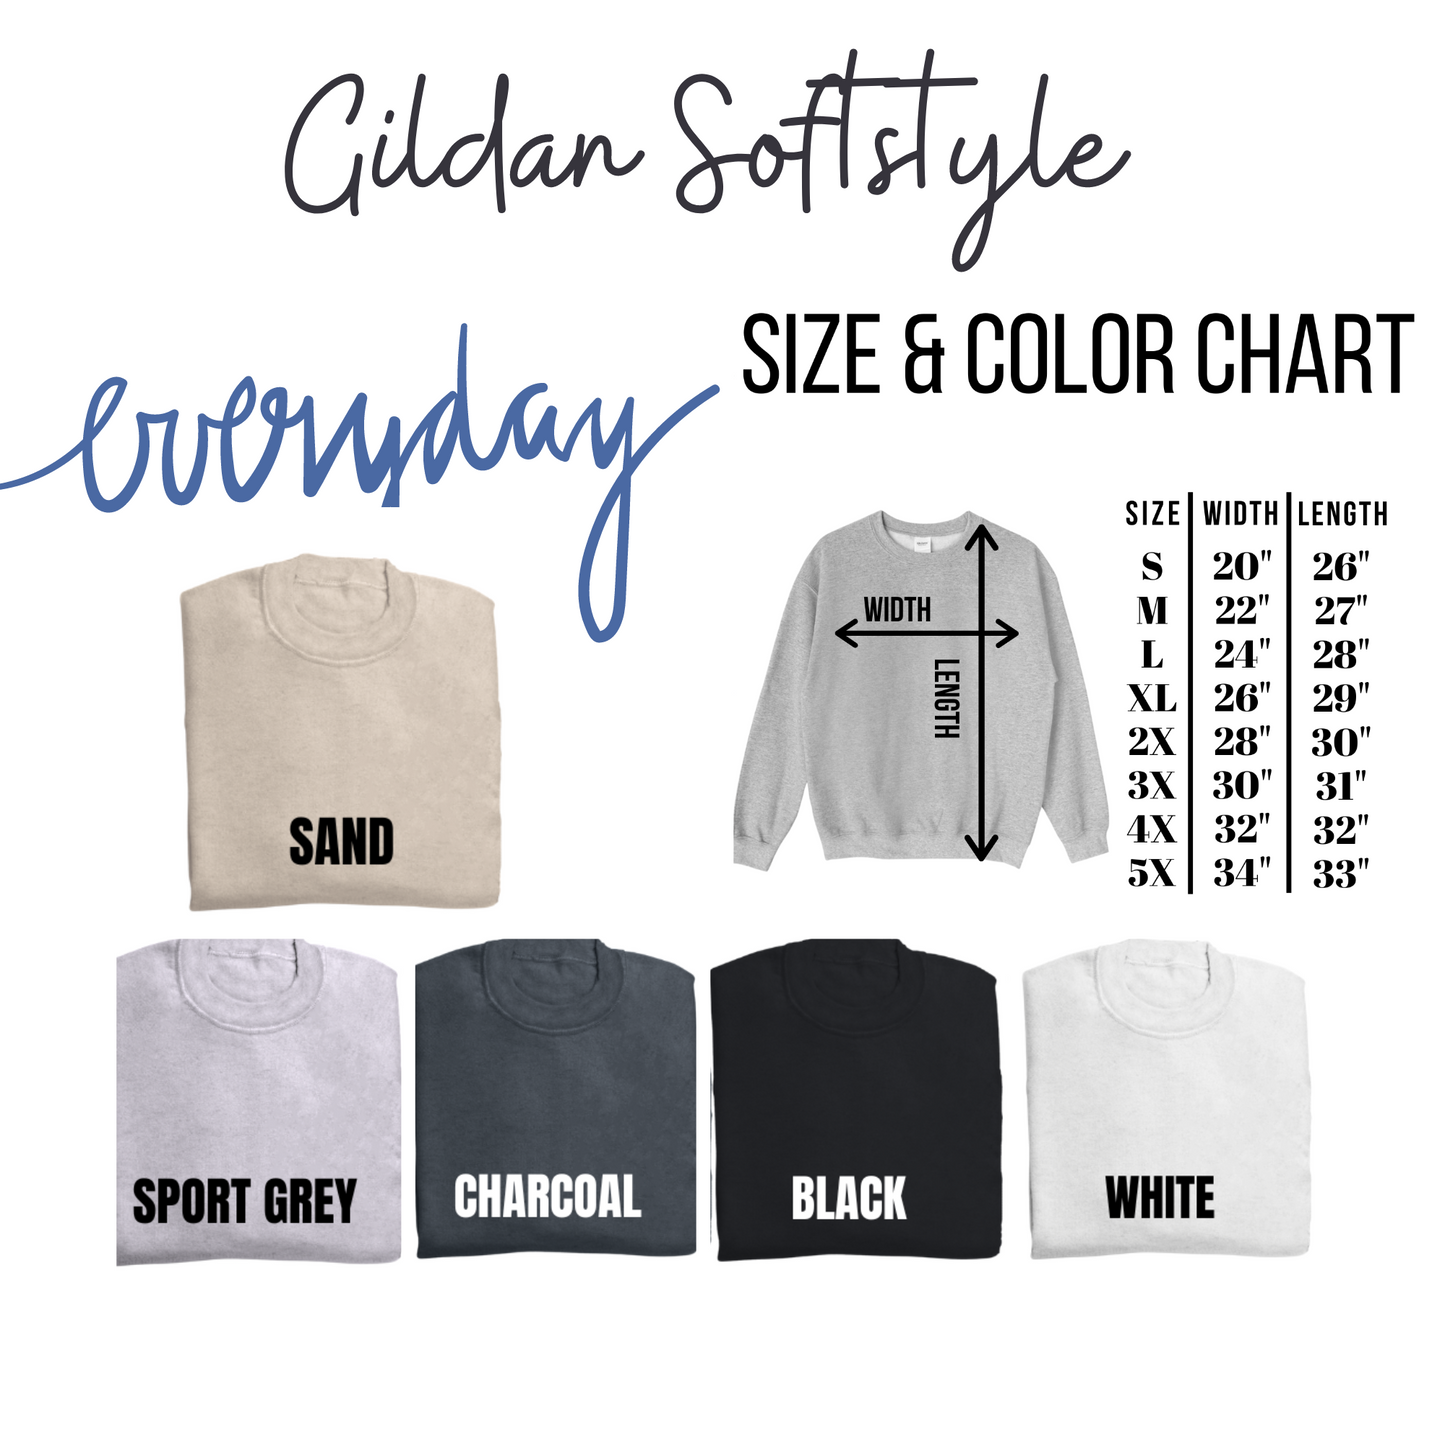 Strength and Song Gildan Softstyle T-shirt or Sweatshirt